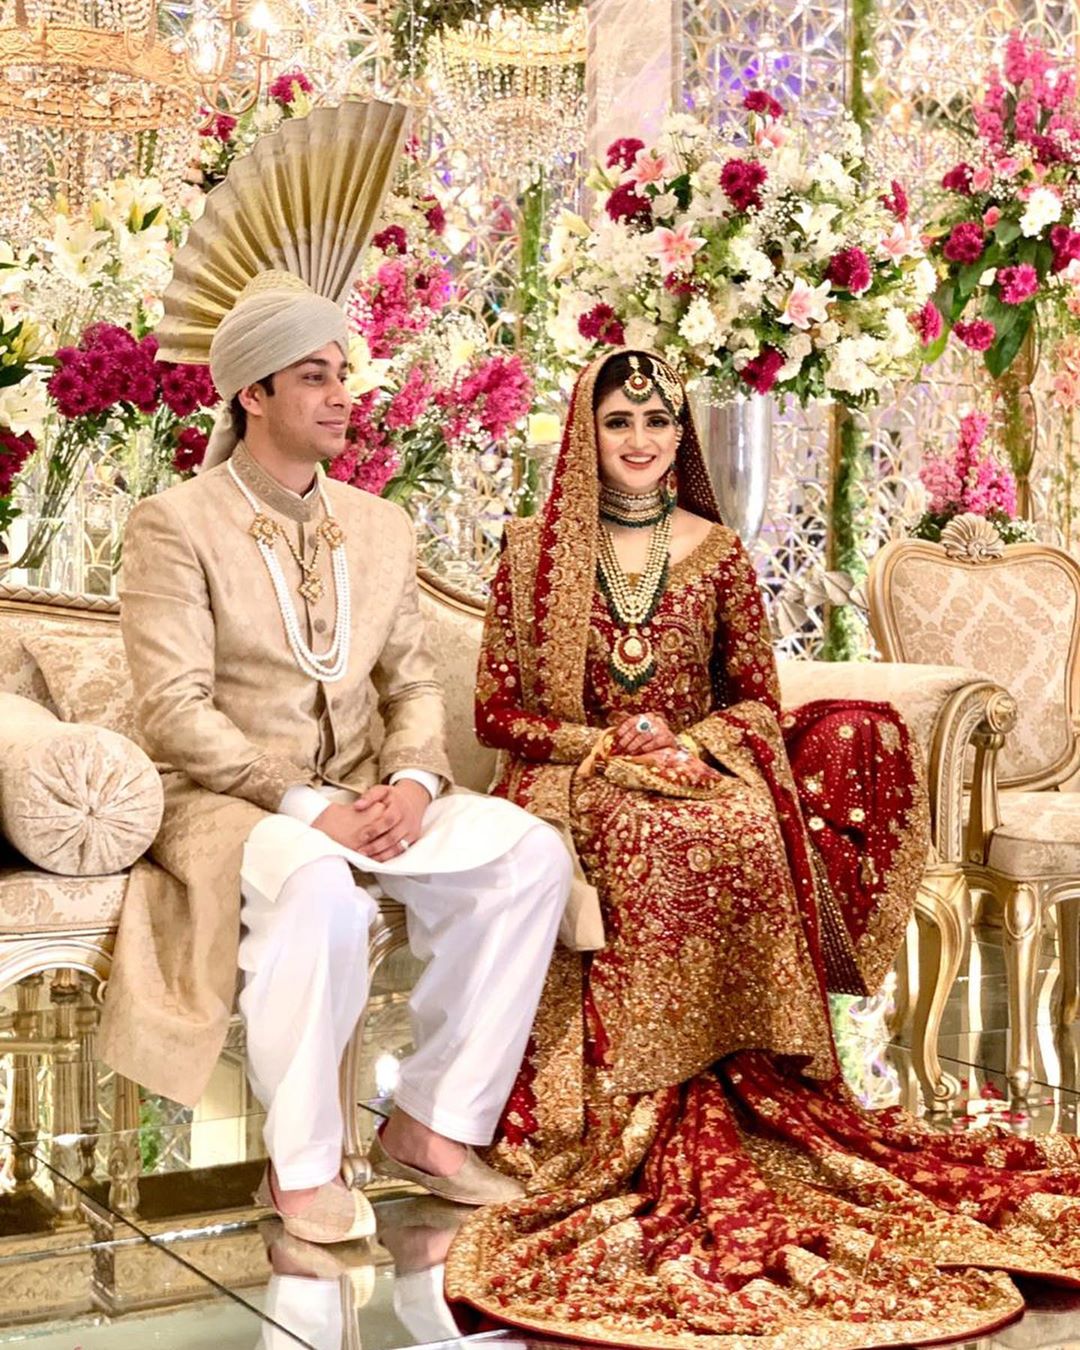 Former Chief Justice of Pakistan Saqib Nisar Son Najam Wedding Pictures